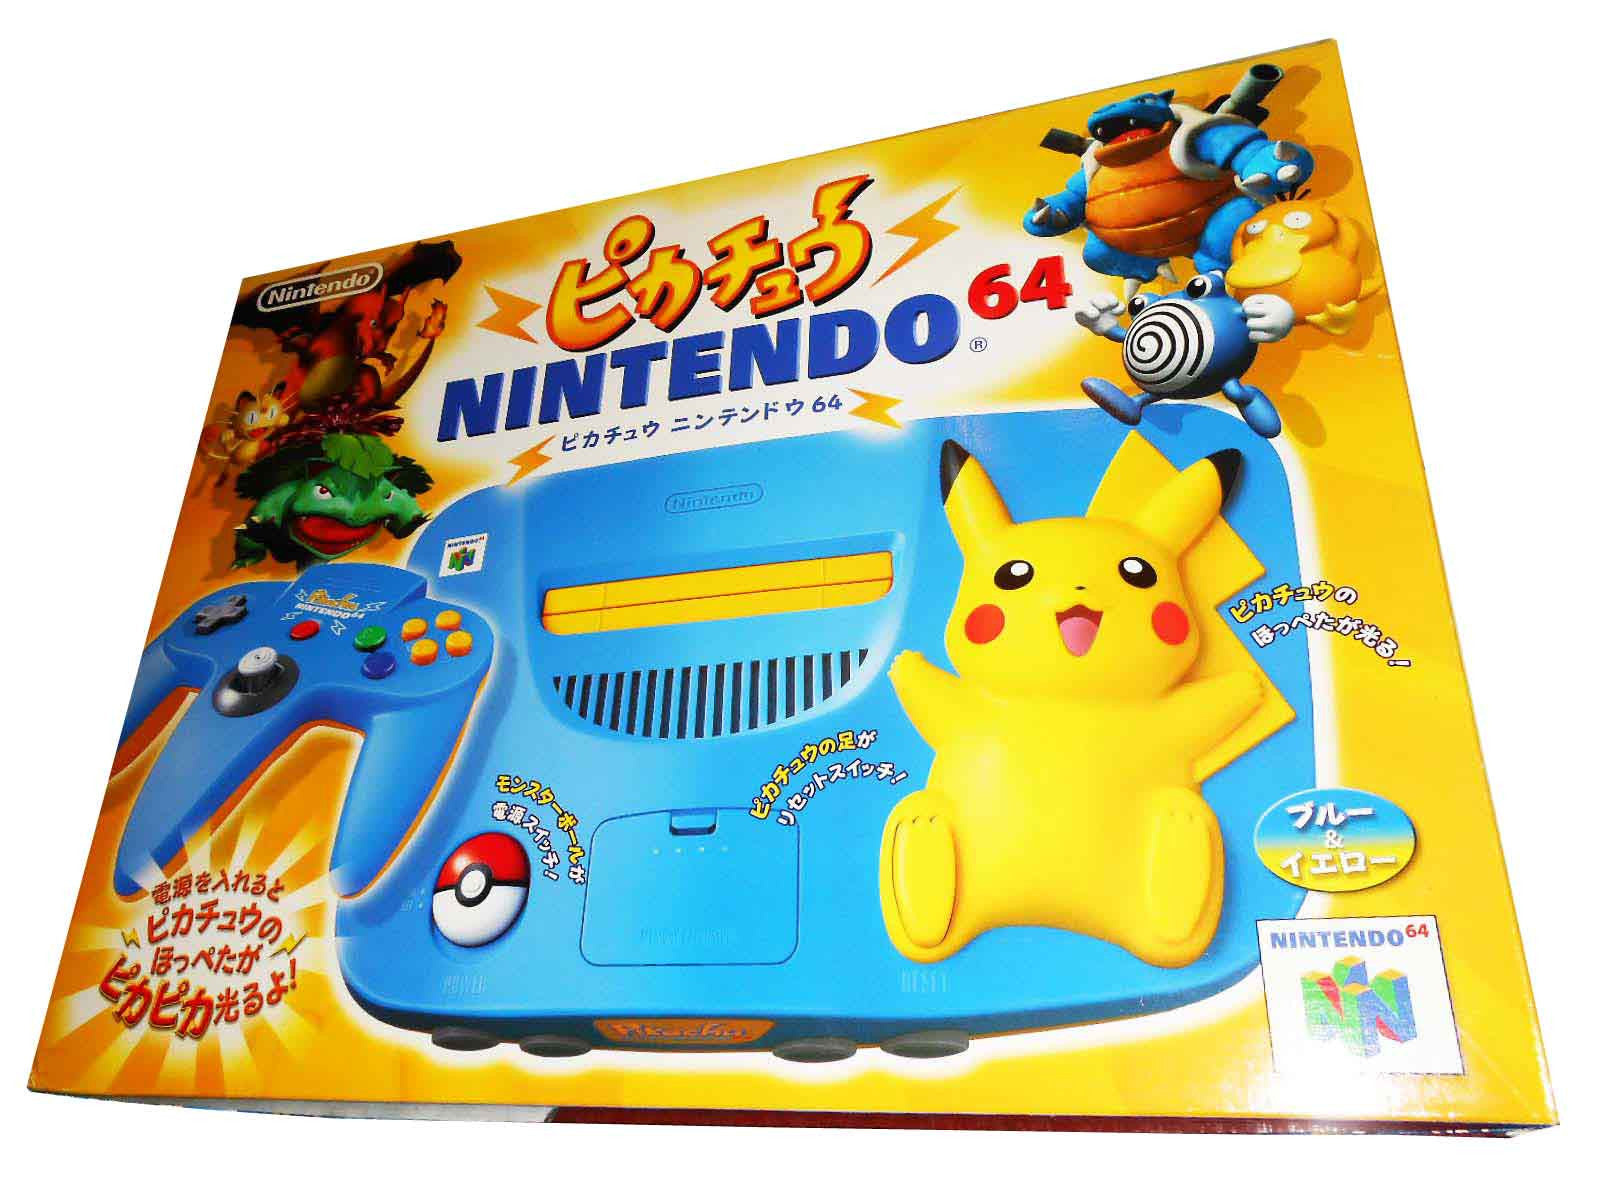 n64 pikachu edition price